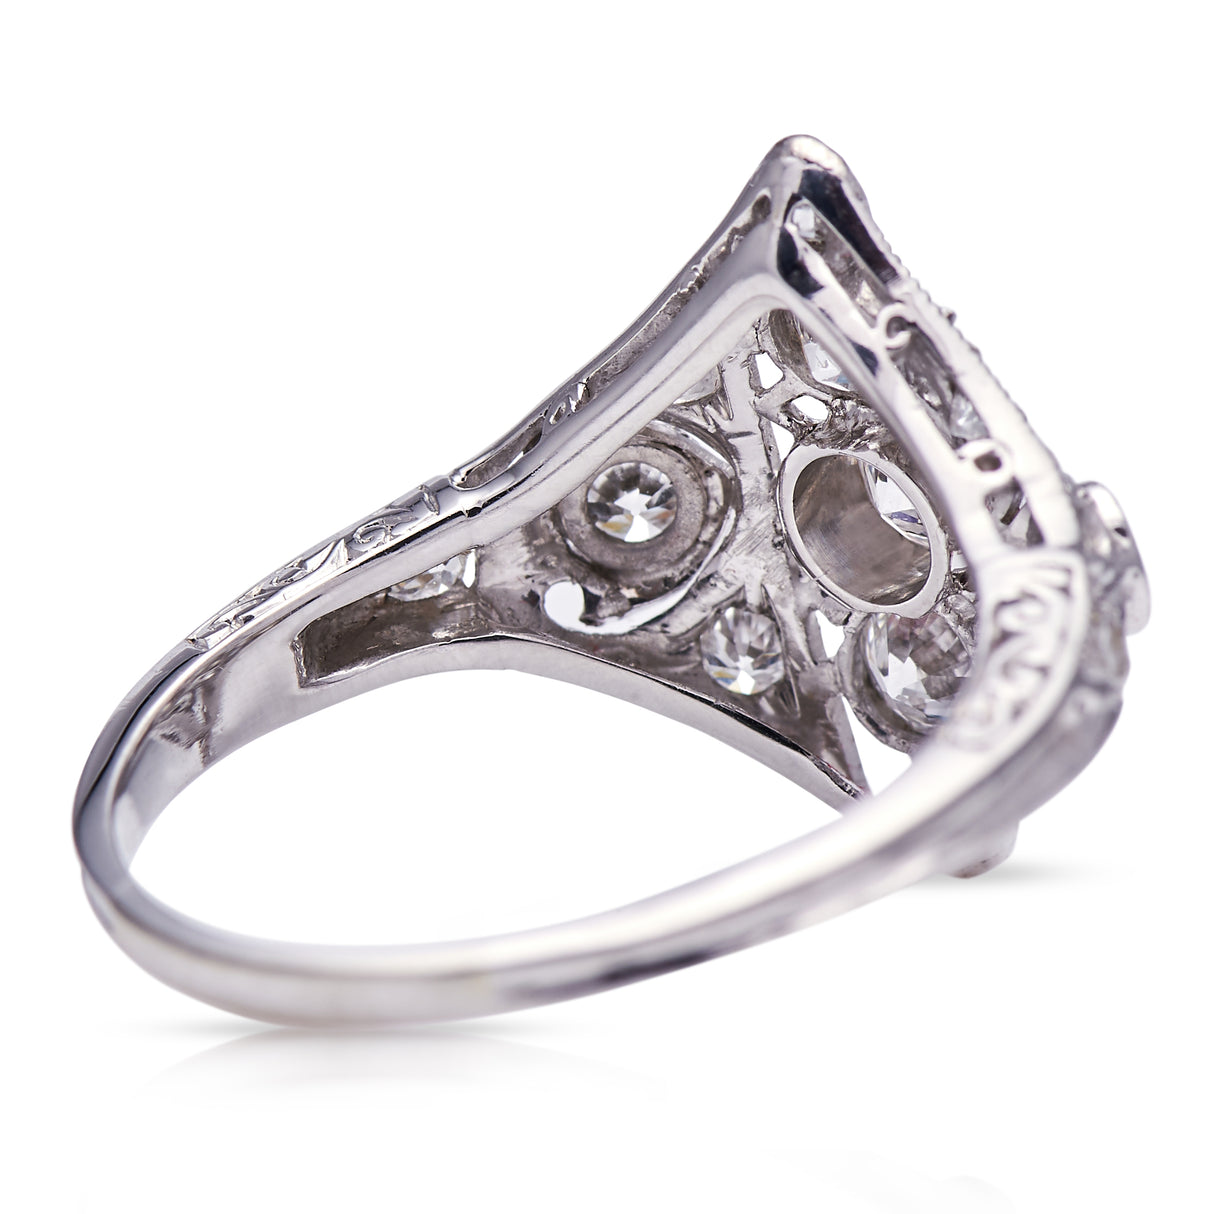 Antique Art Deco, 18ct White Gold, Diamond Engagement Ring